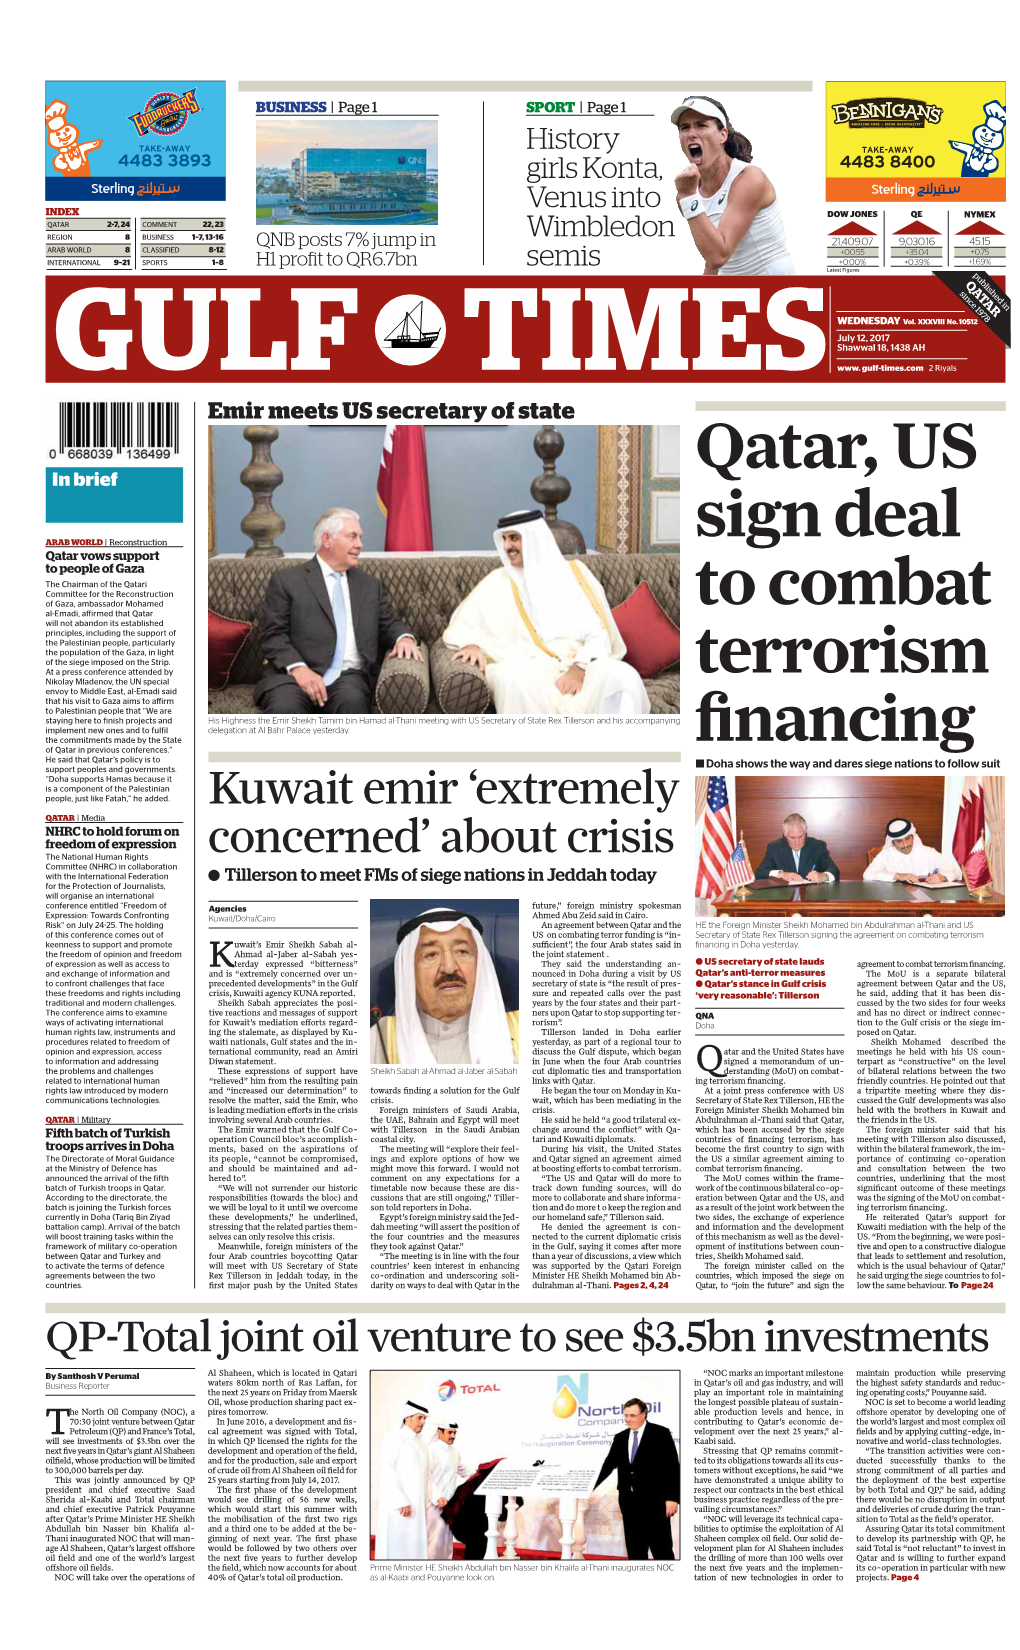 Qatar, US Sign Deal to Combat Terrorism Financing